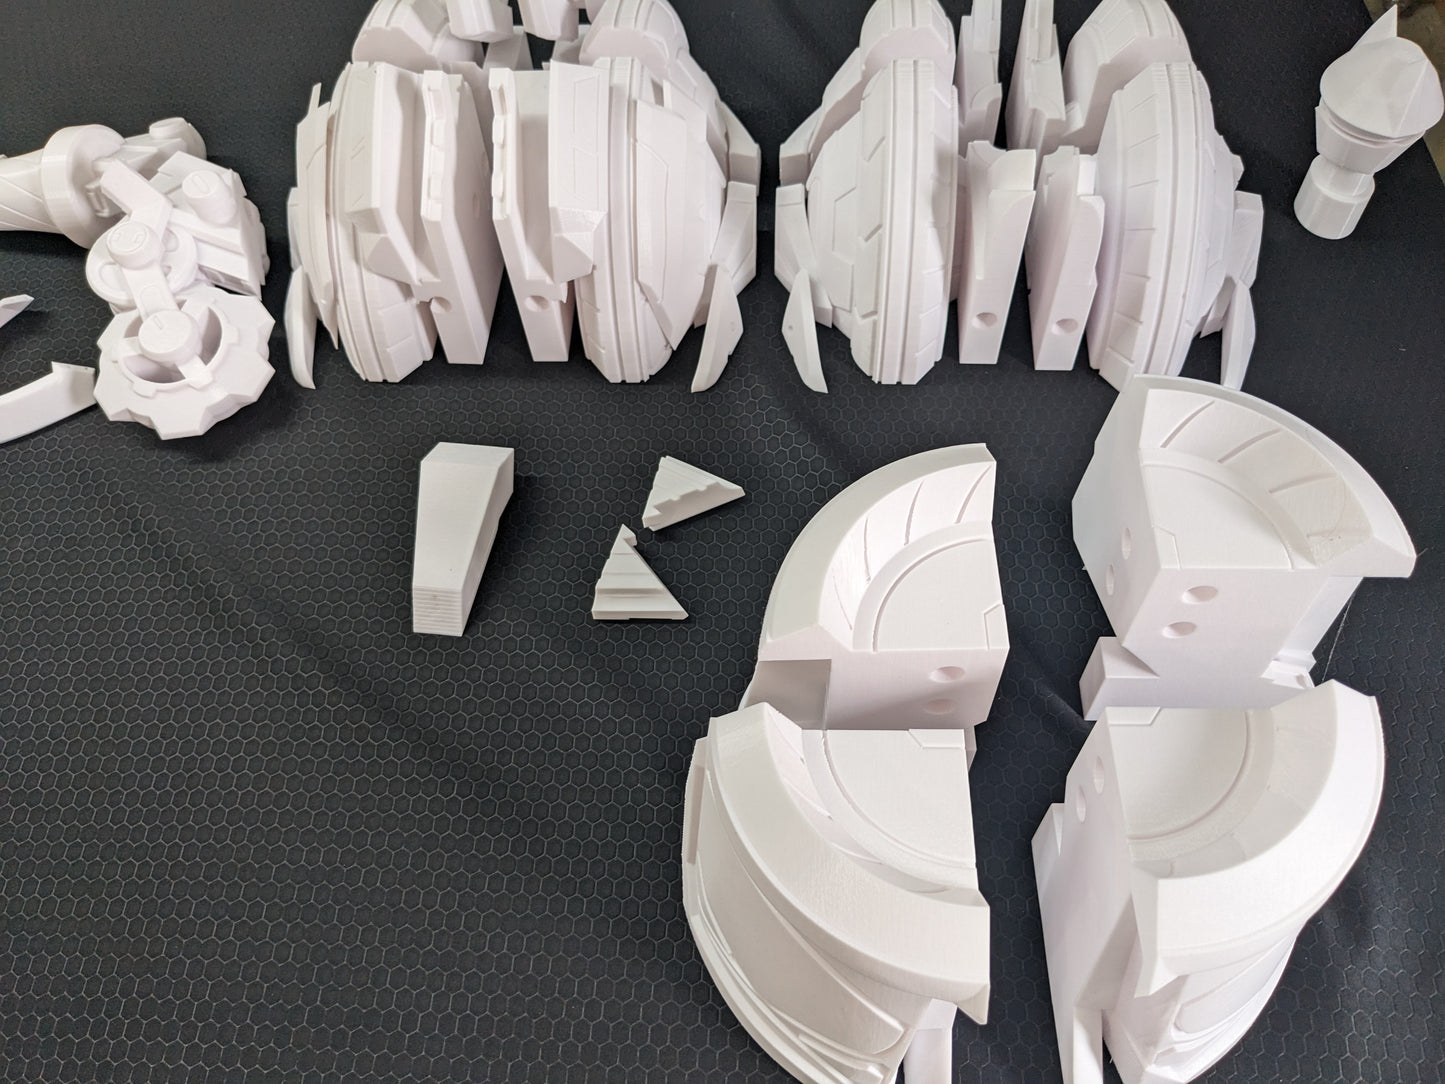 Herta Hammer - Digital 3D Model Files and Physical 3D Printed Kit Options - Honkai: Star Rail Cosplay - Herta Cosplay